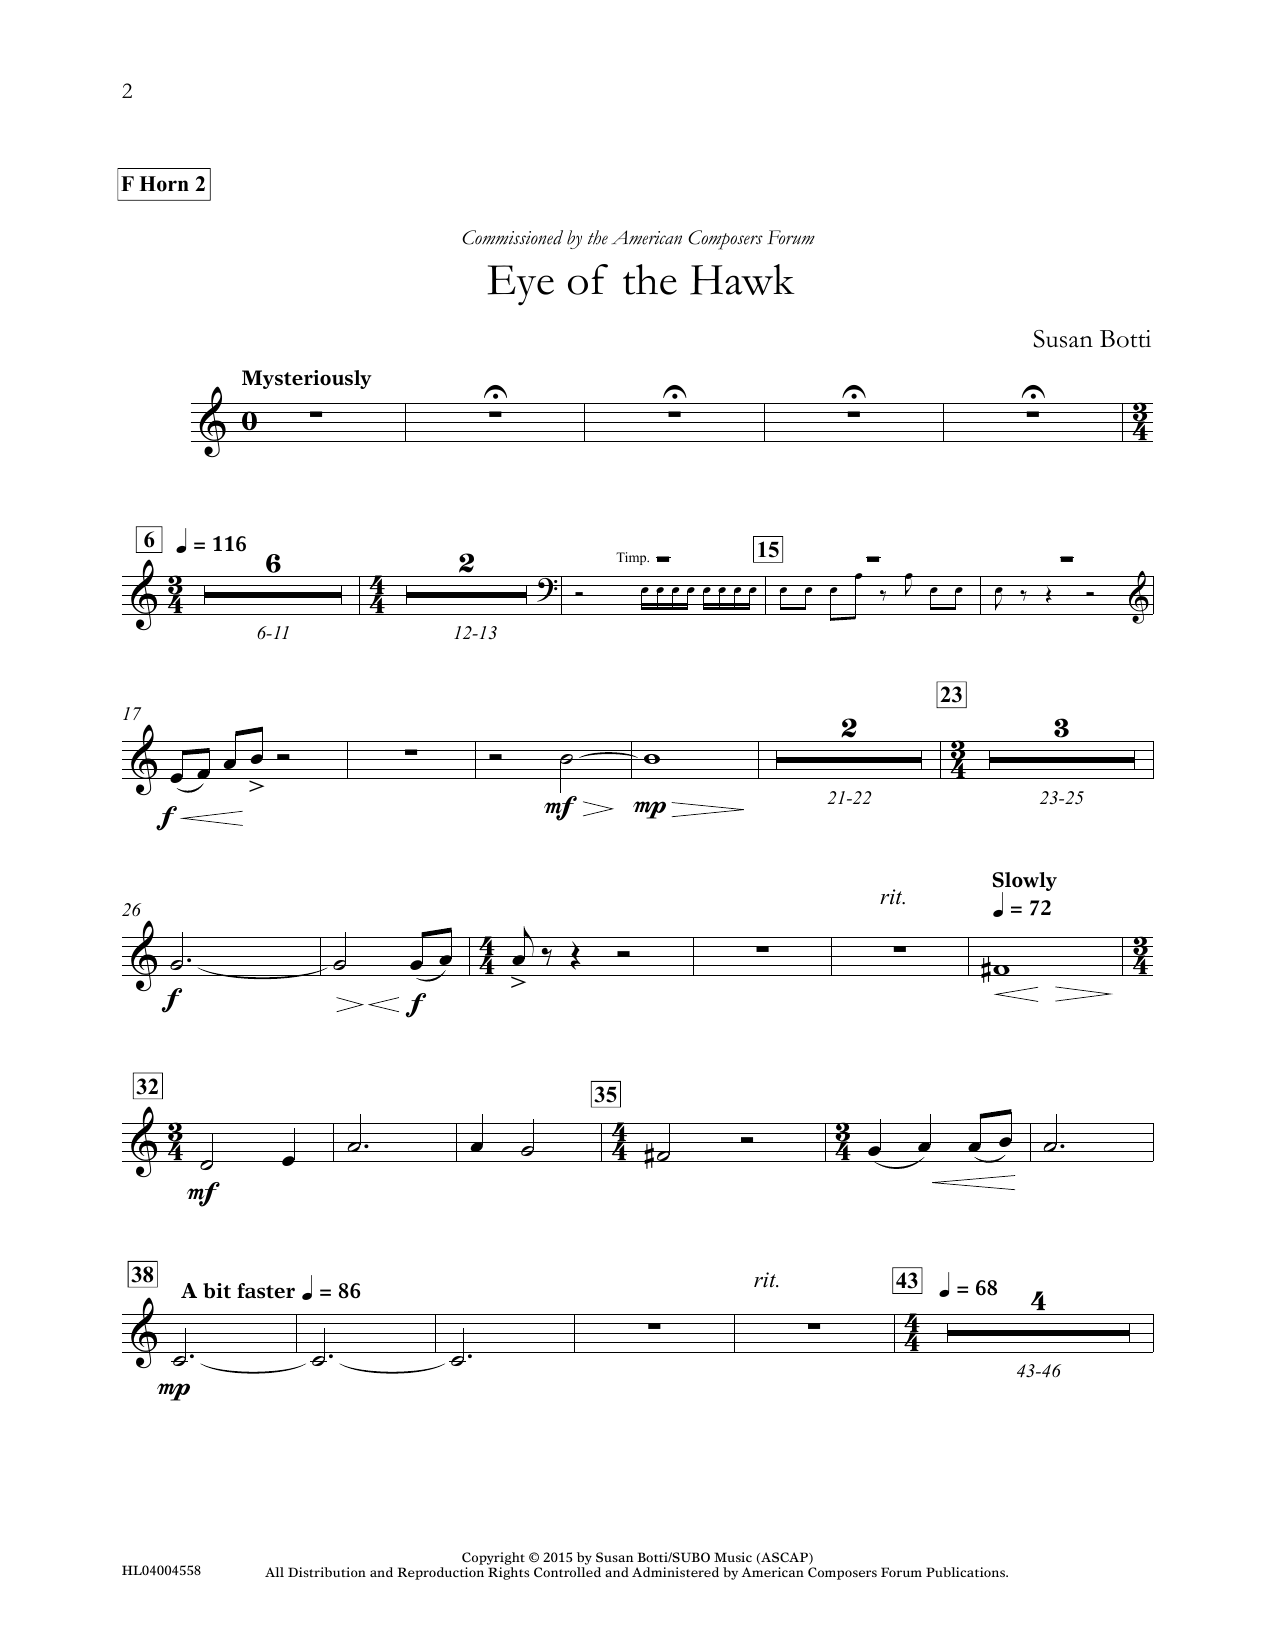 Download Susan Botti Eye of the Hawk - F Horn 2 Sheet Music